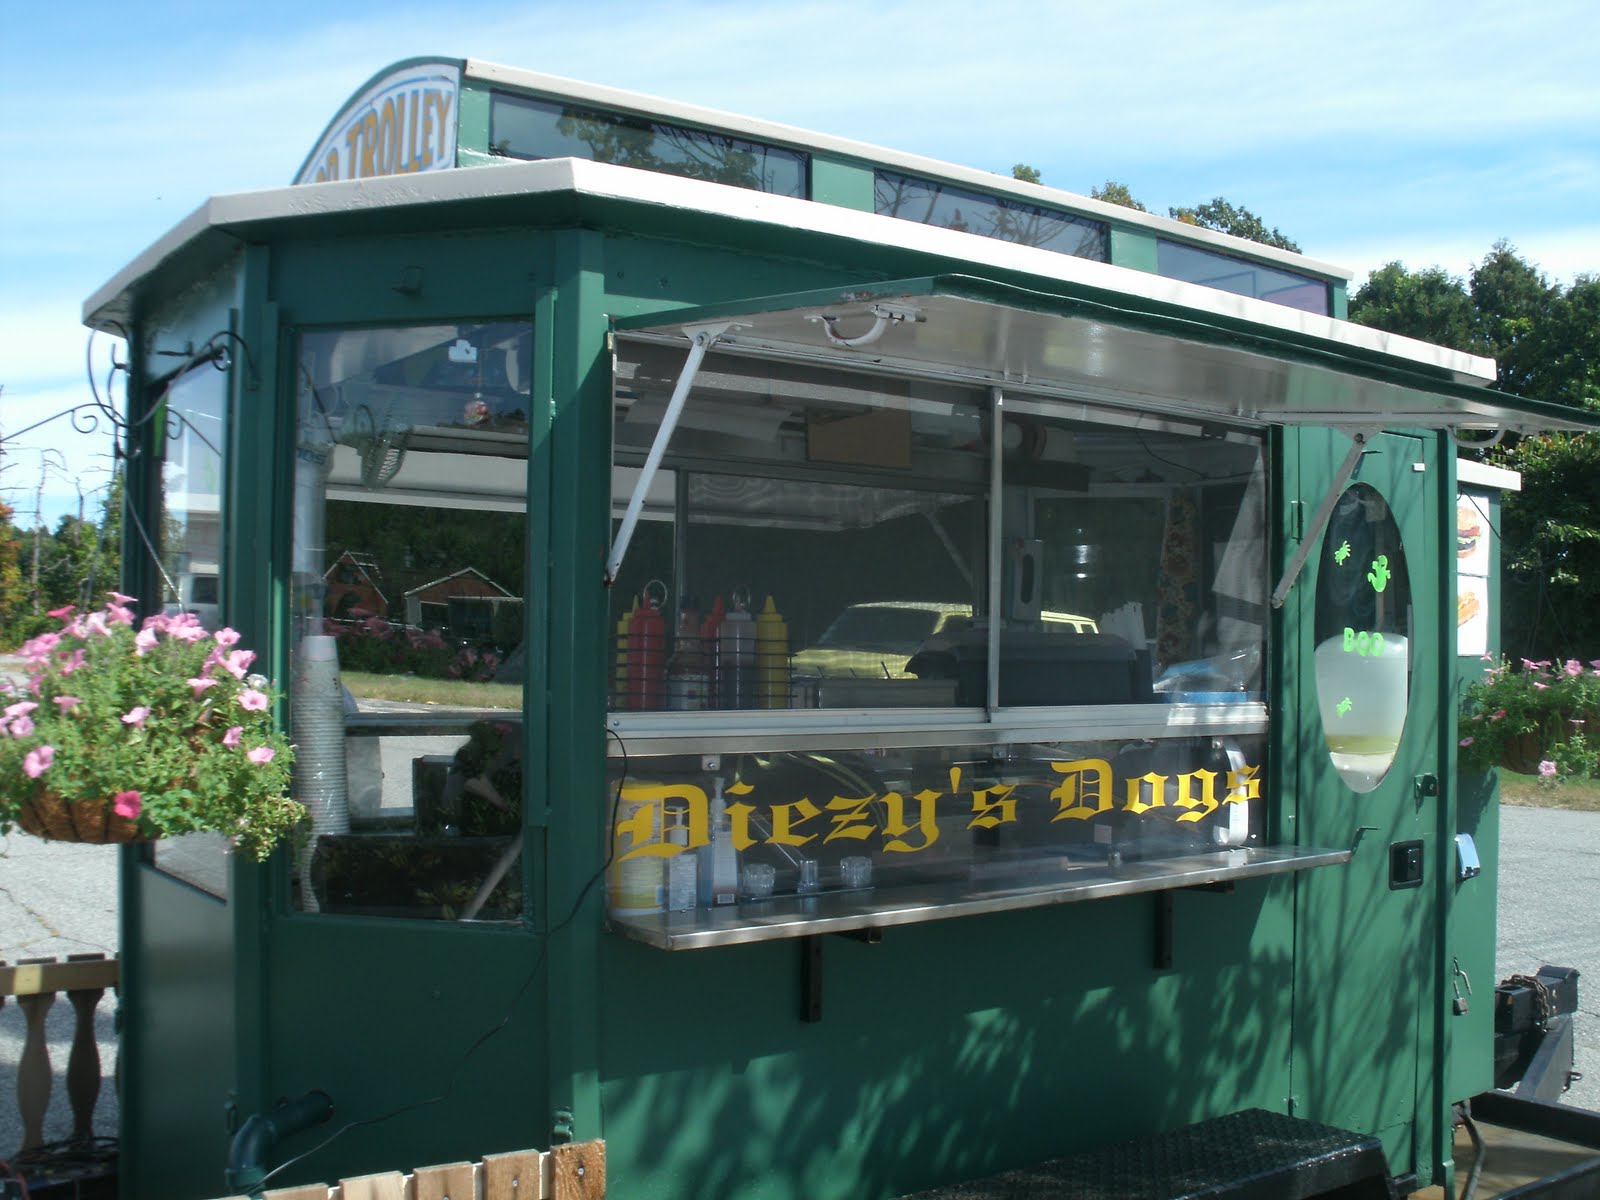 The Hot Dog Truck: Hot Dog Trailer for Sale in Framingham, MA